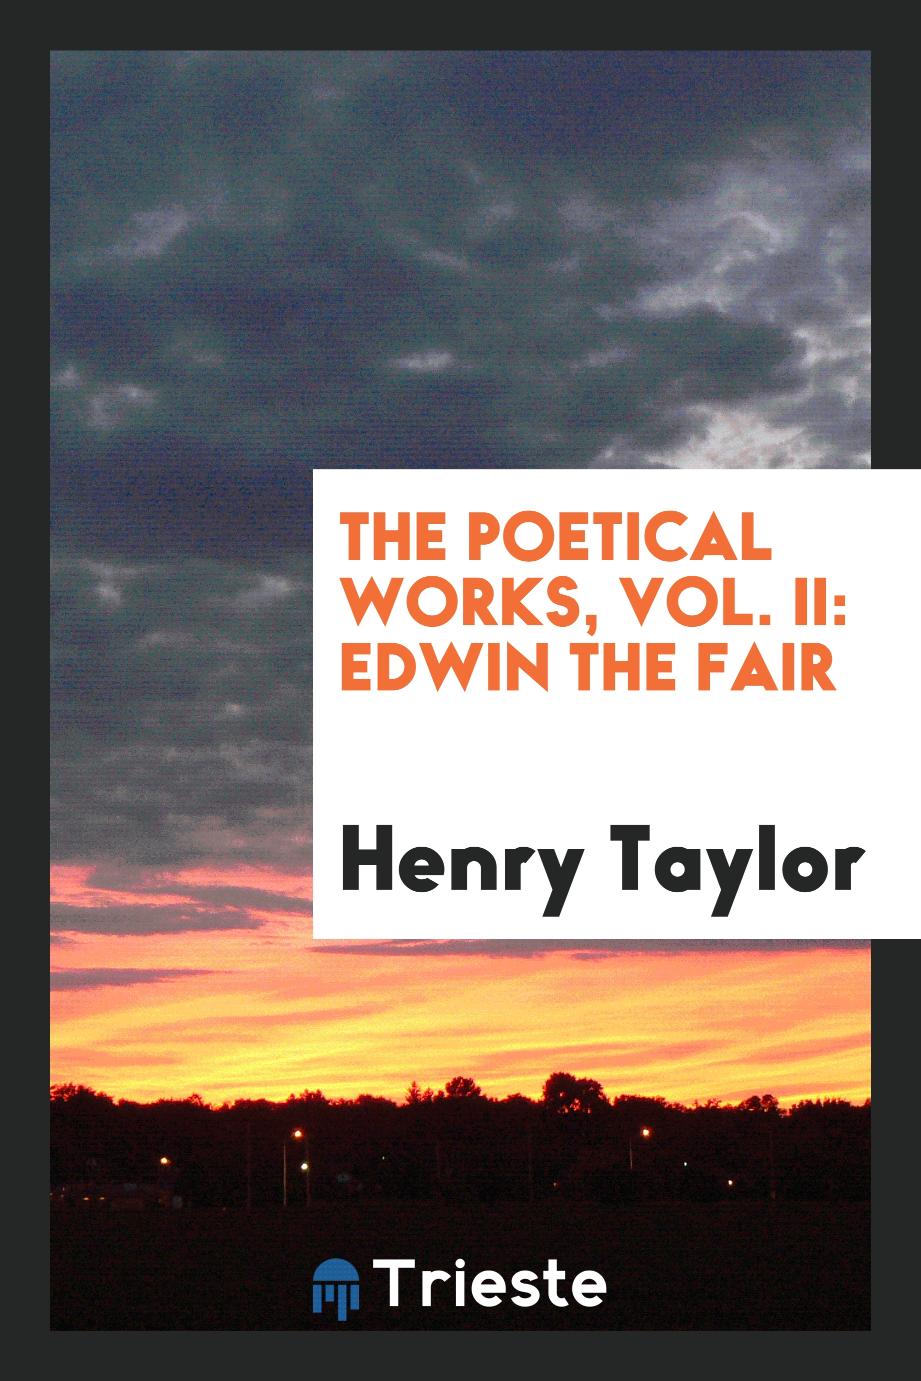 The poetical works, Vol. II: Edwin the fair